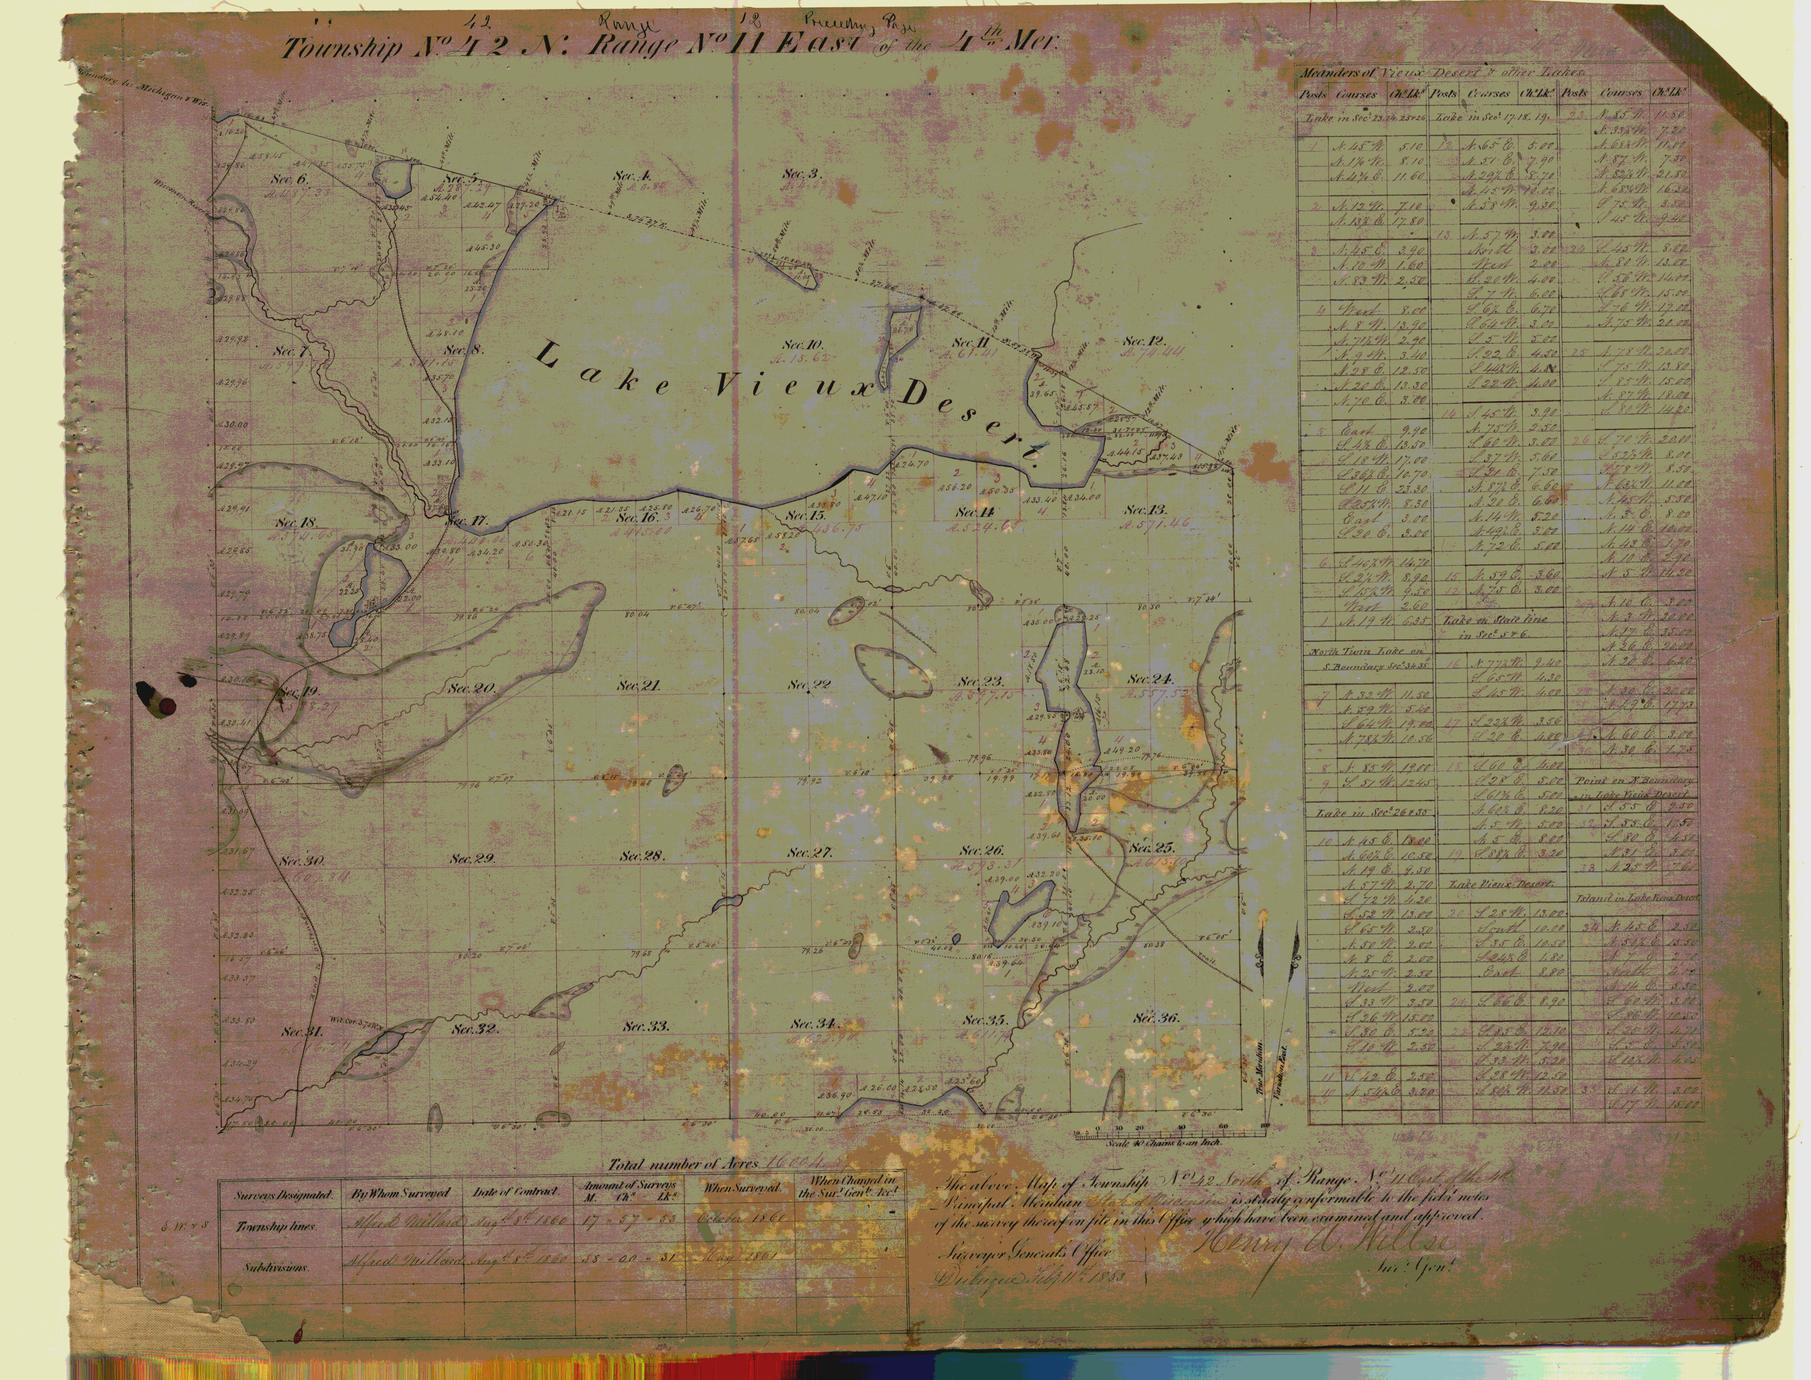 [Public Land Survey System map: Wisconsin Township 42 North, Range 11 East]